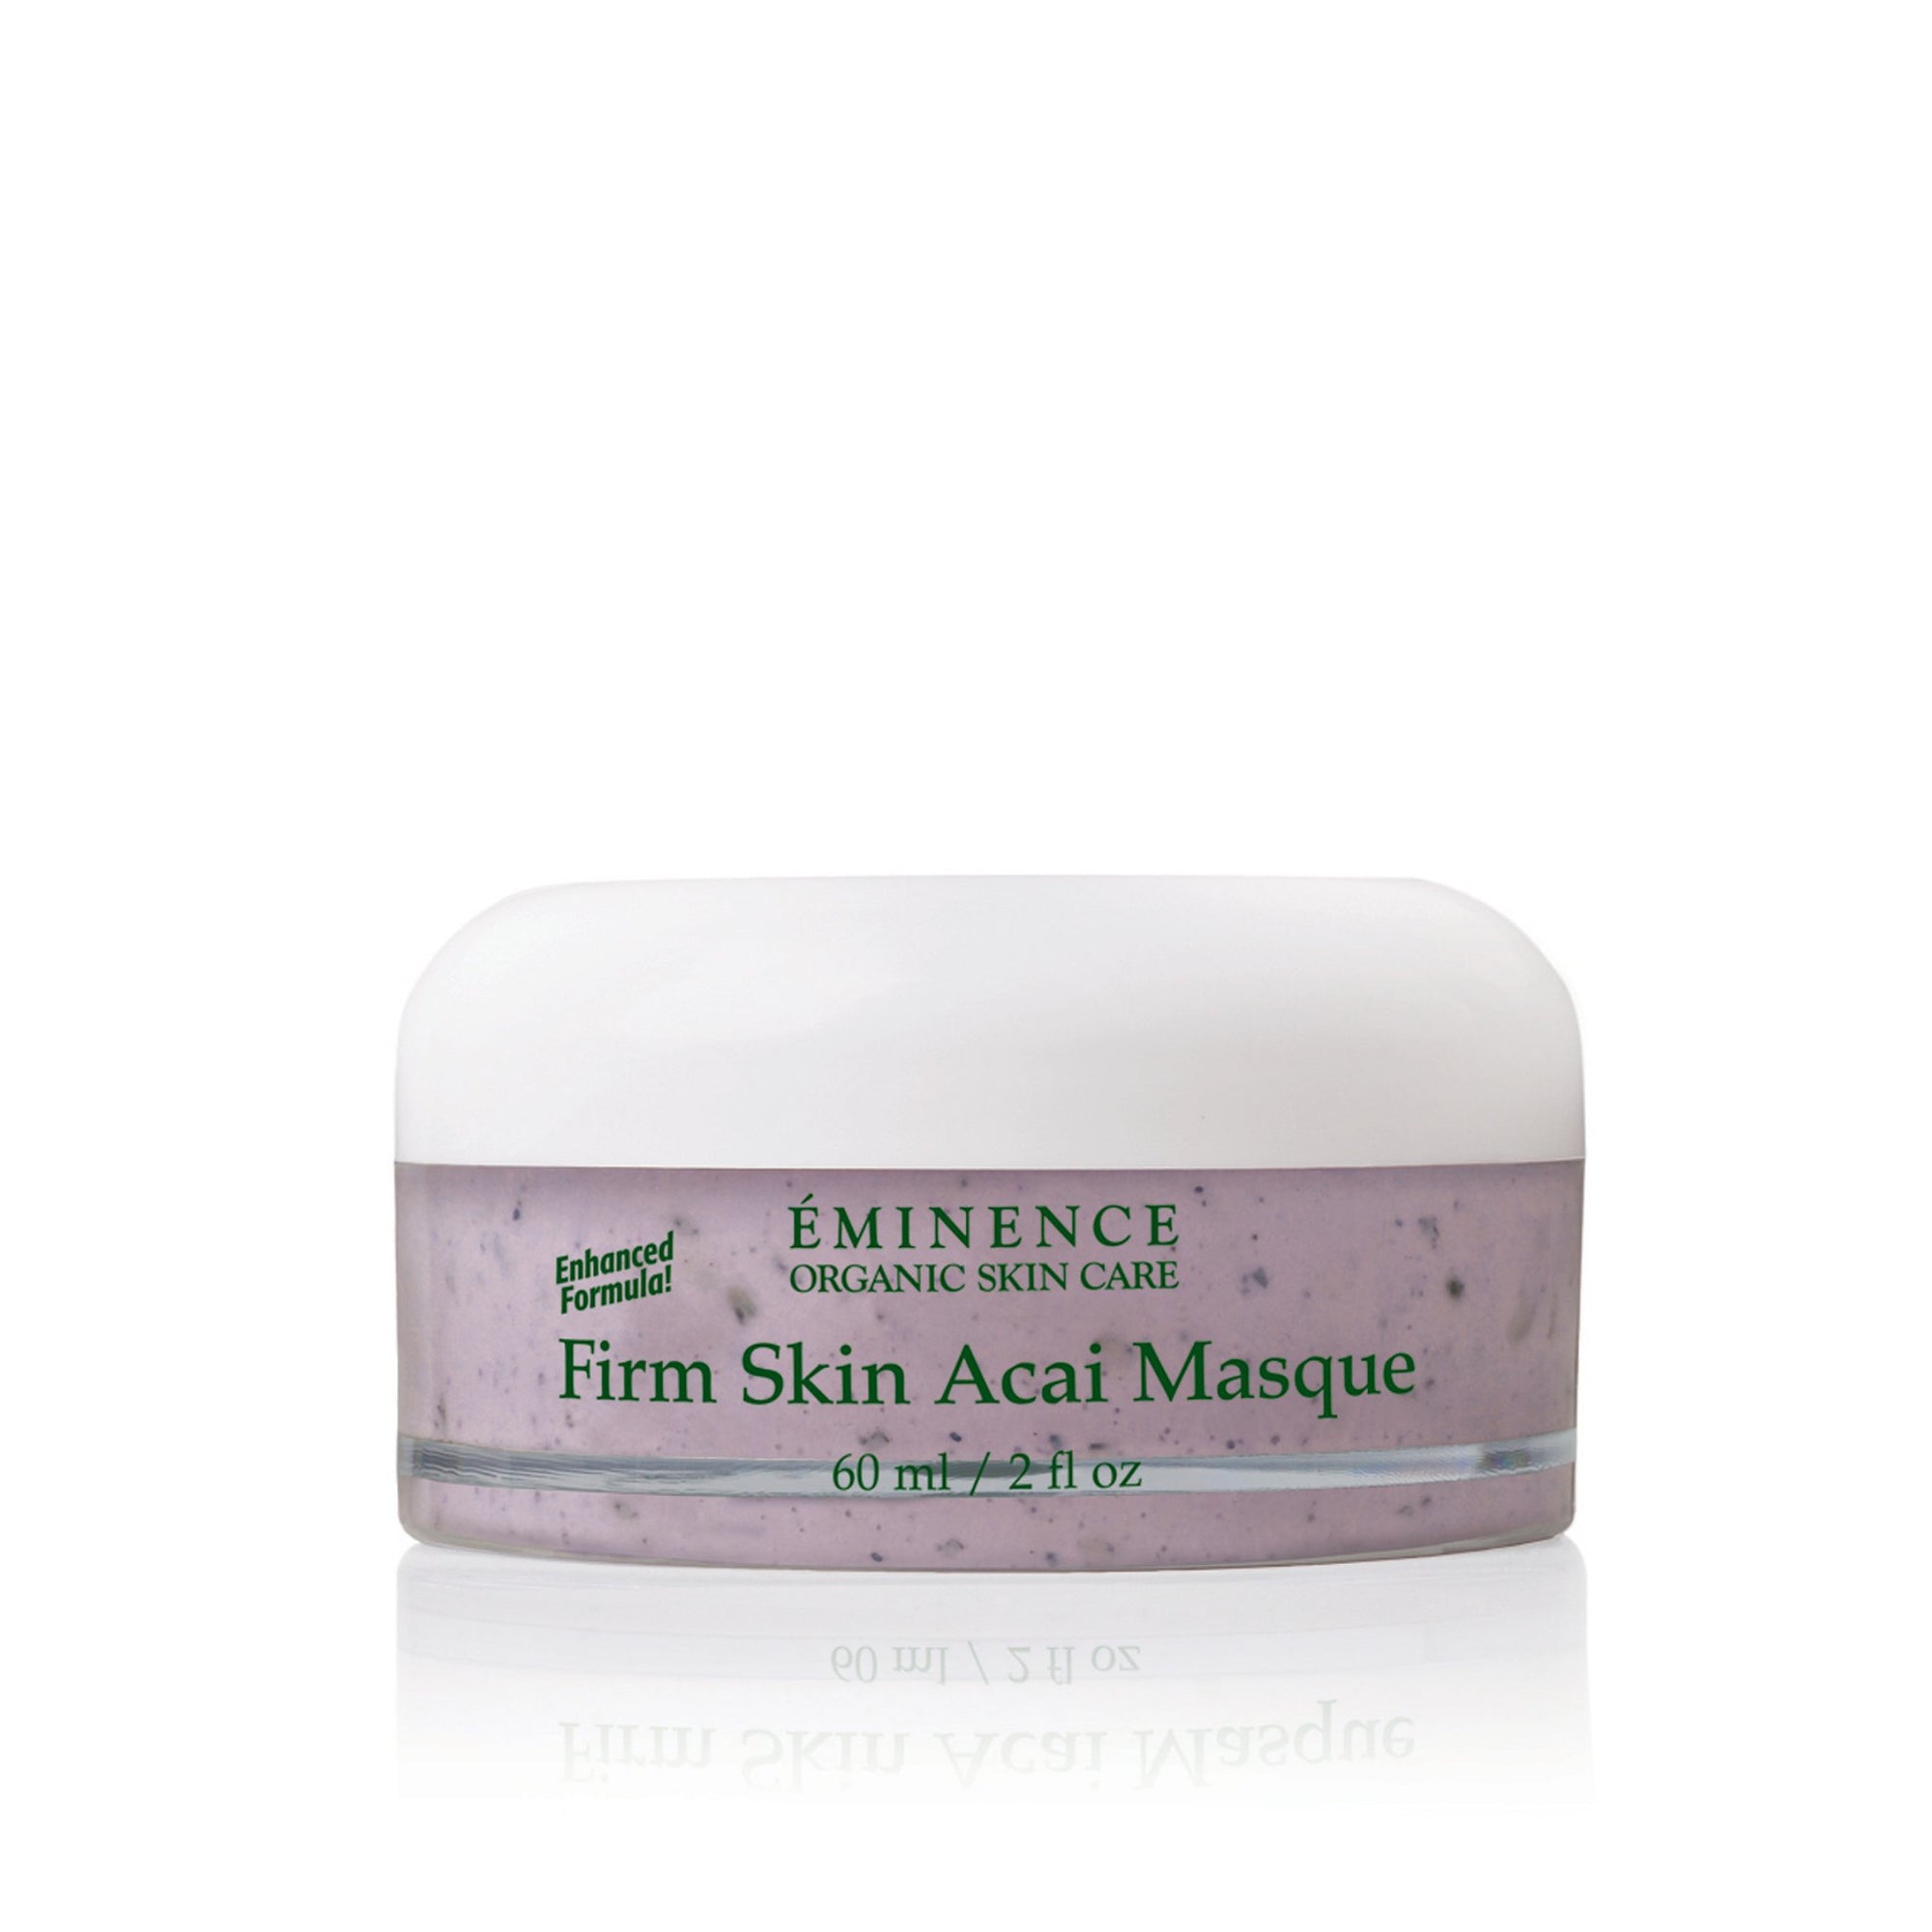 Eminence Organics - Eminence Firm Skin Masque - ORESTA clean beauty simplified